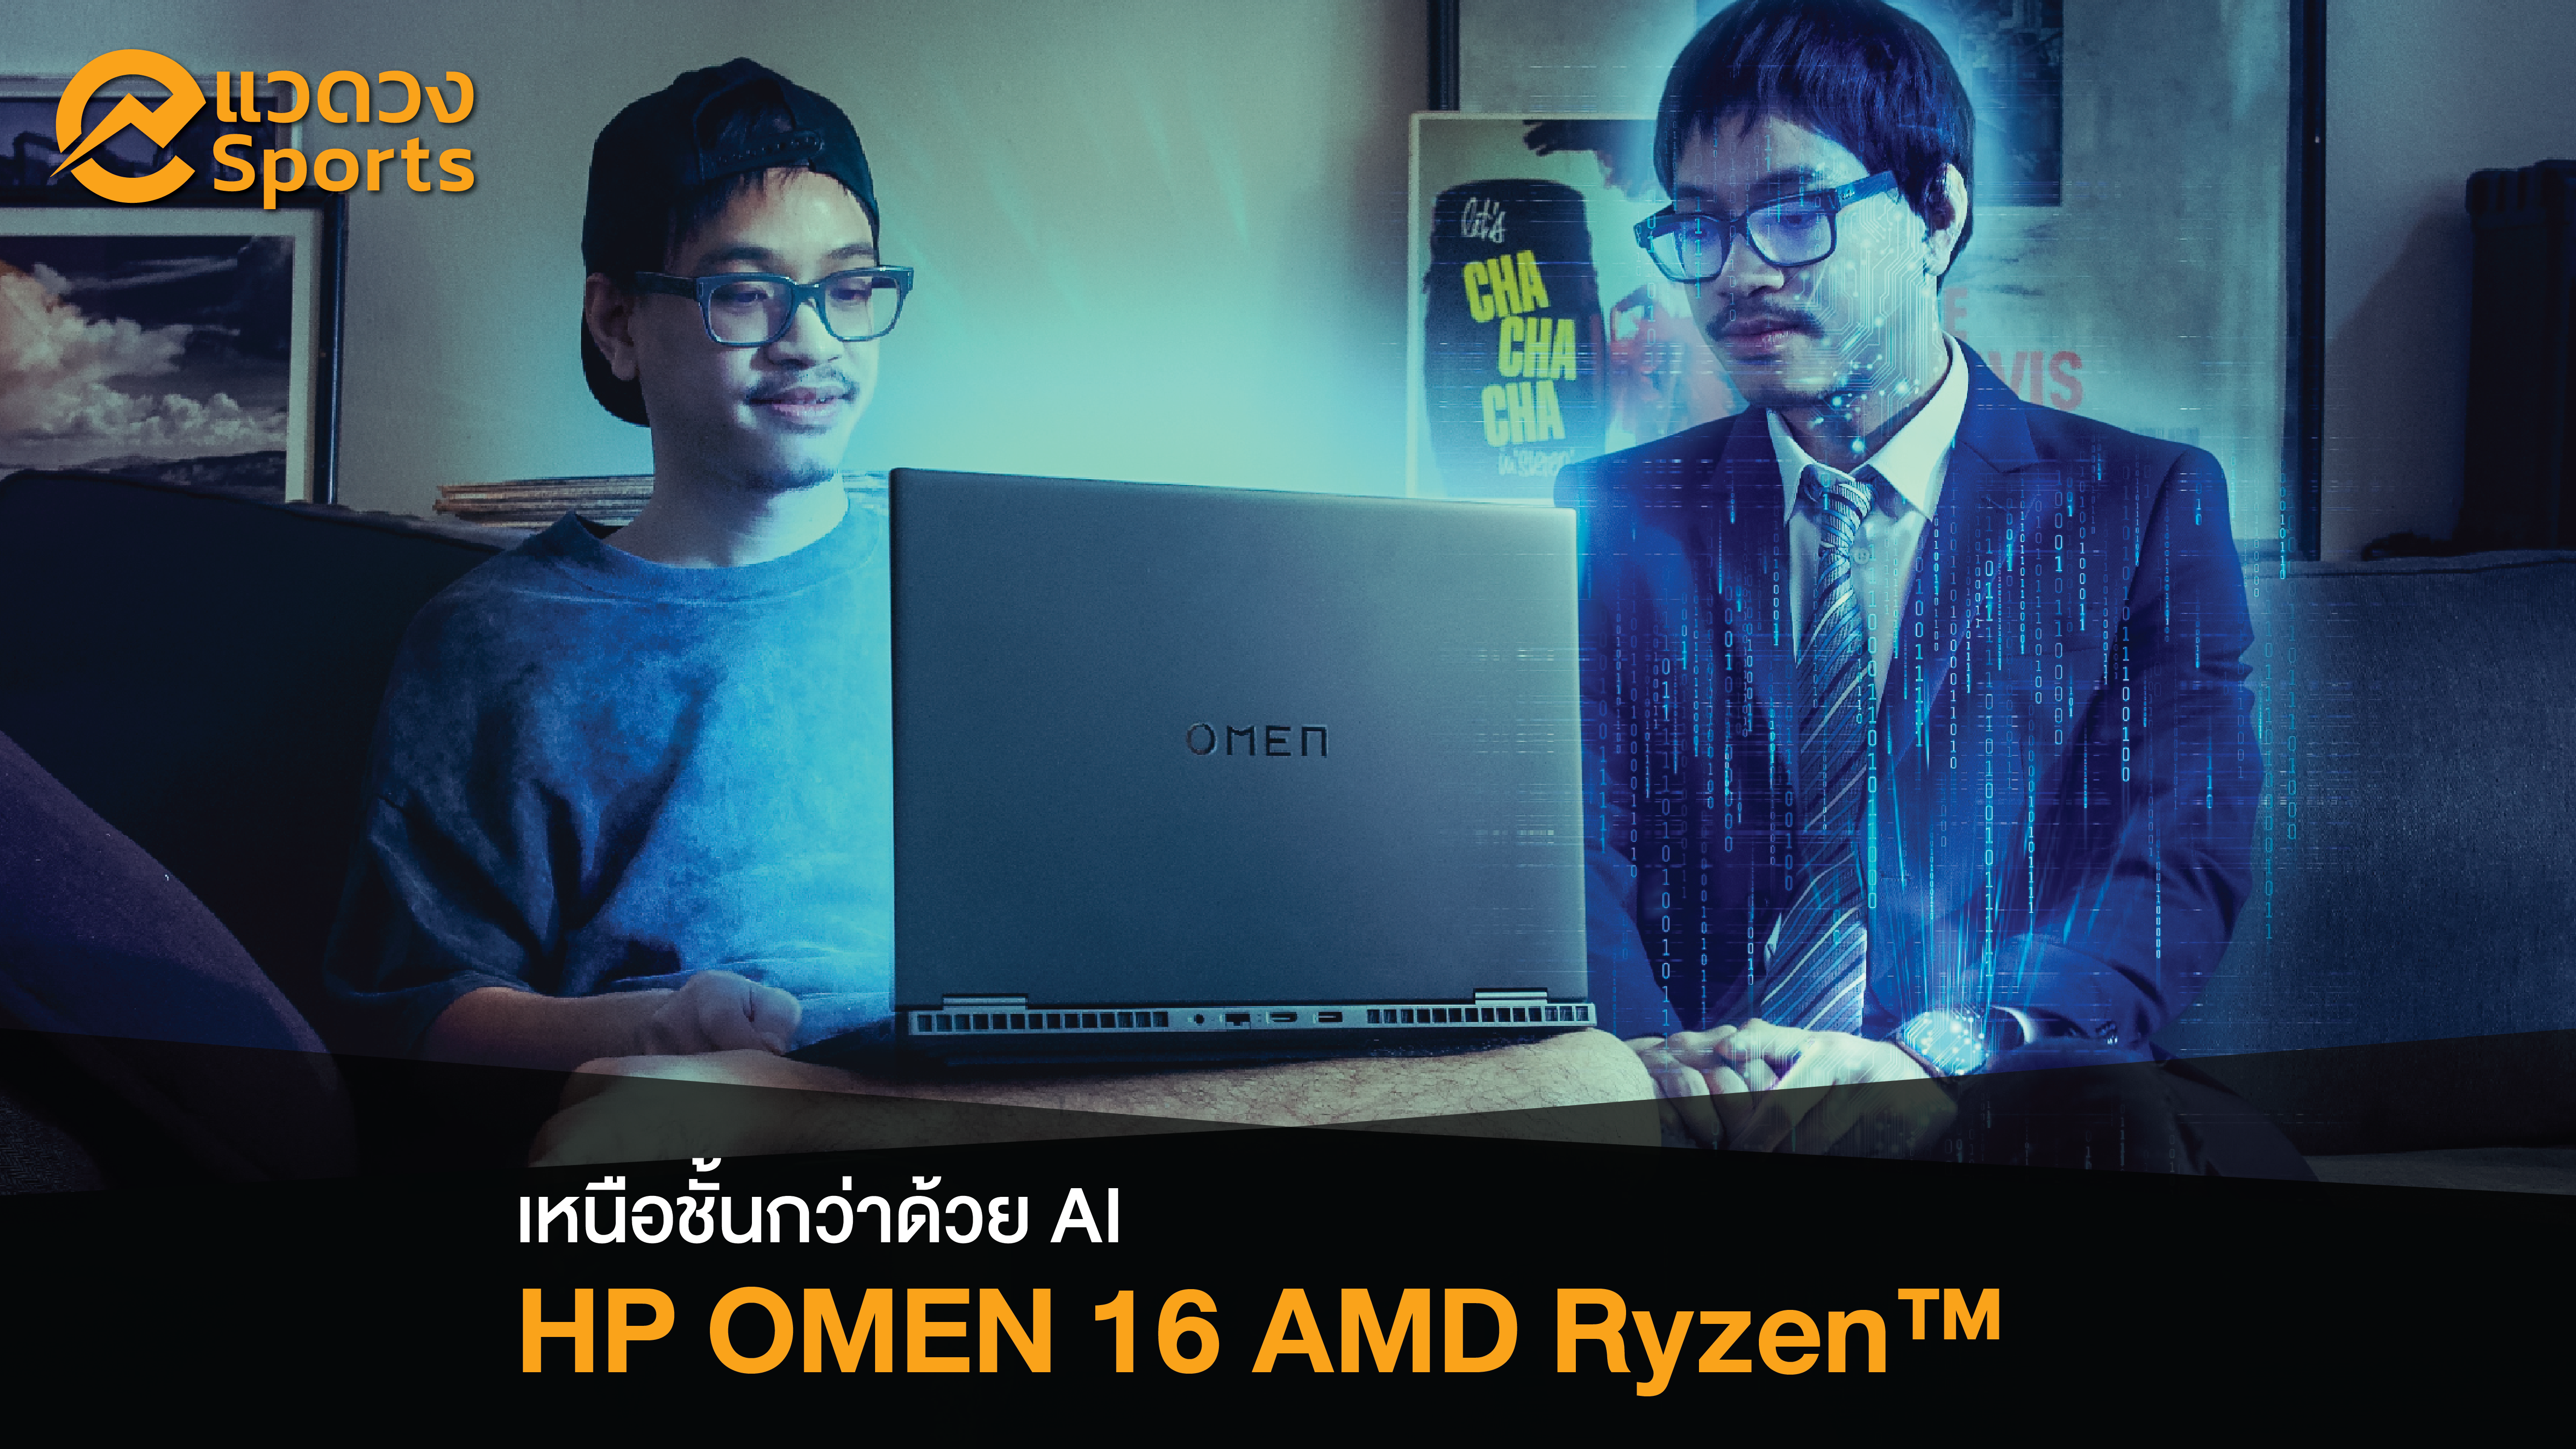 HP Omen 16 โน๊ตบุ๊คเหมือนกัน แต่เหนือชั้นกว่าด้วย AMD Ryzen™ AI!